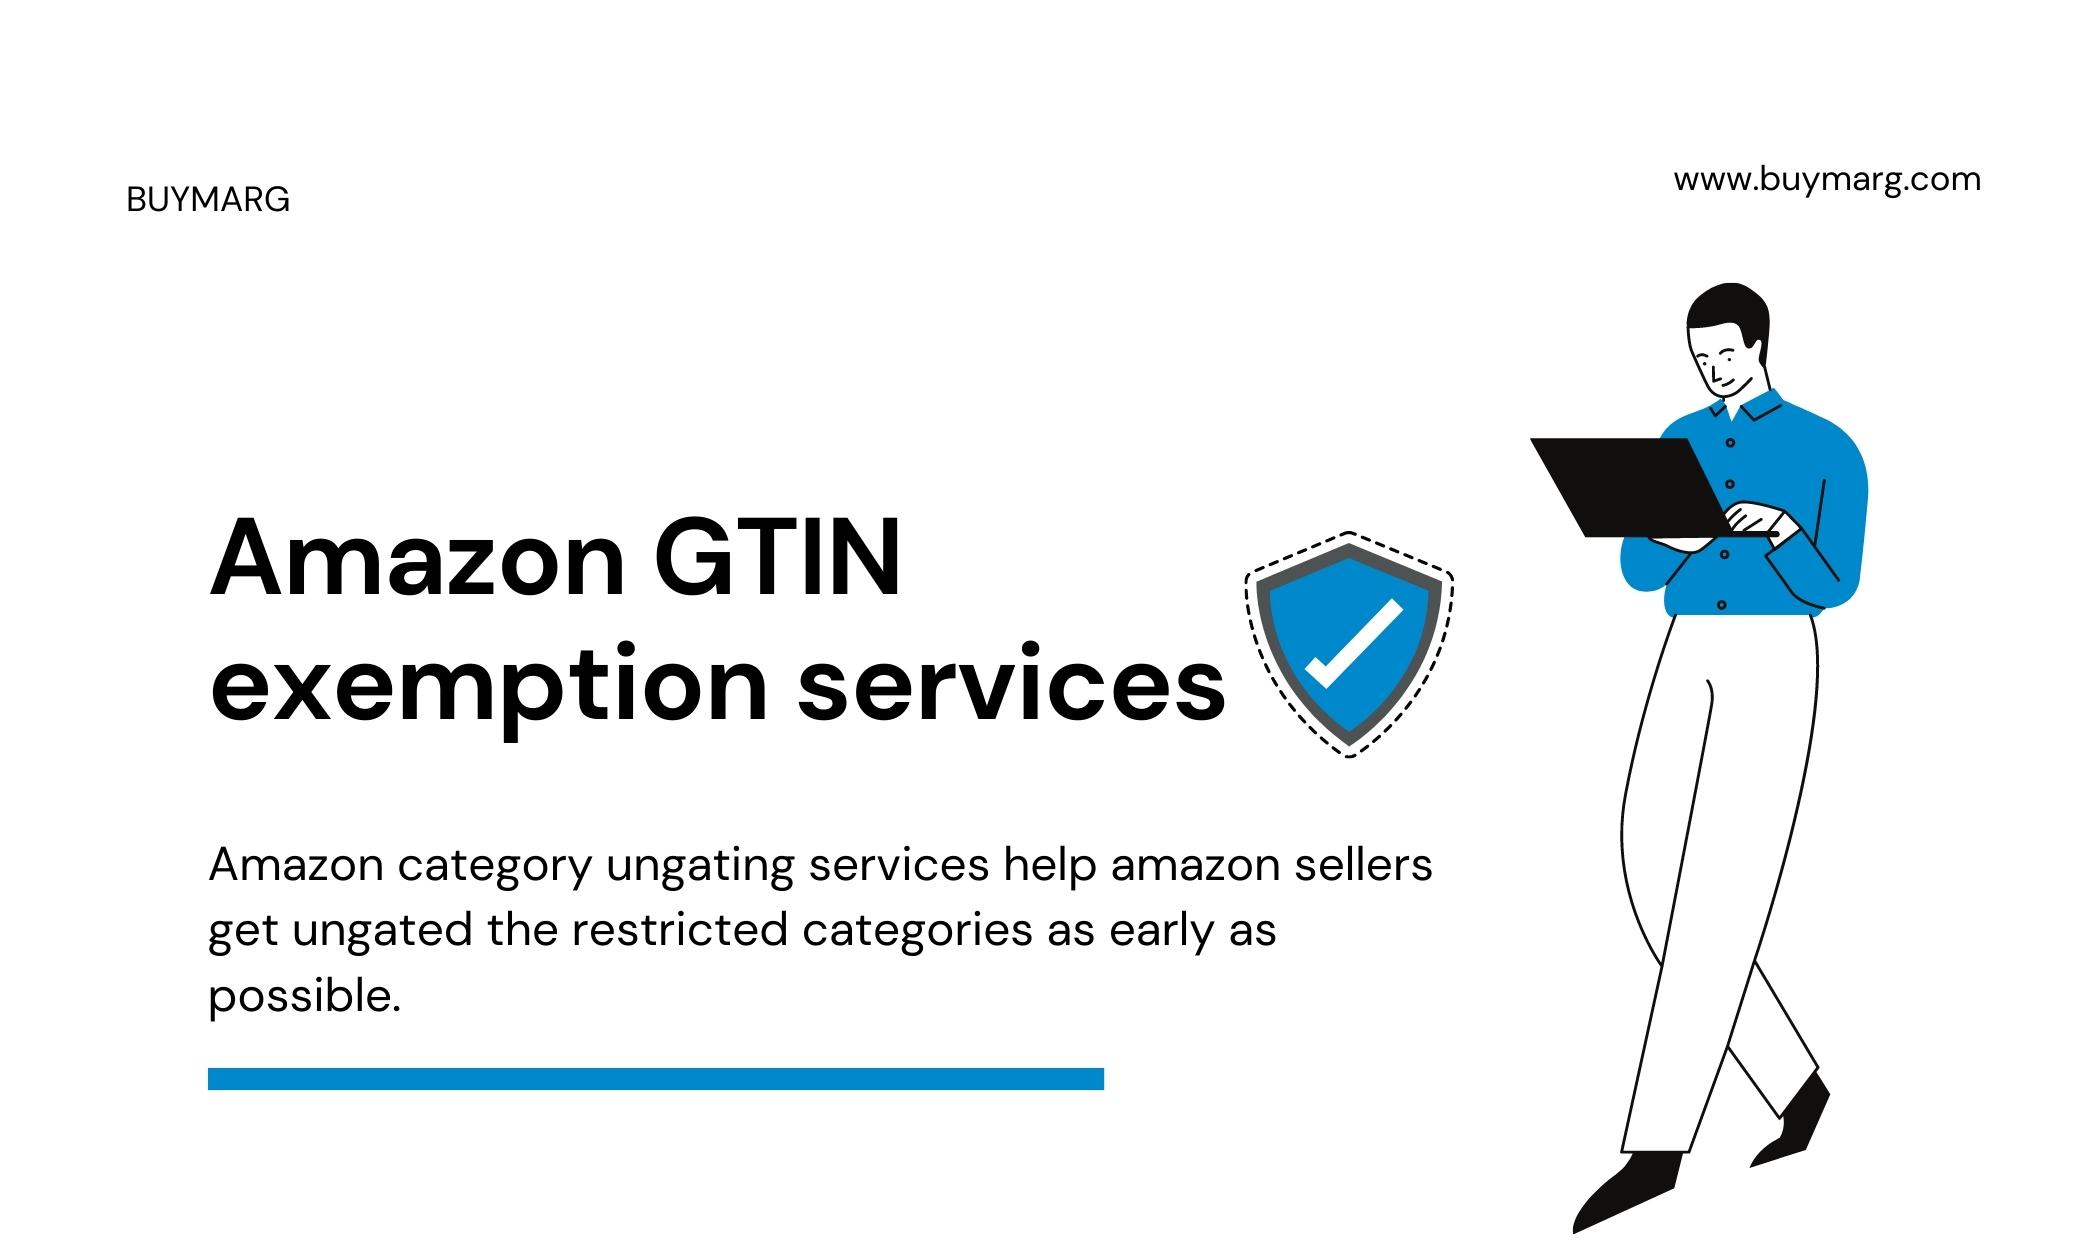 Amazon GTIN exemption services